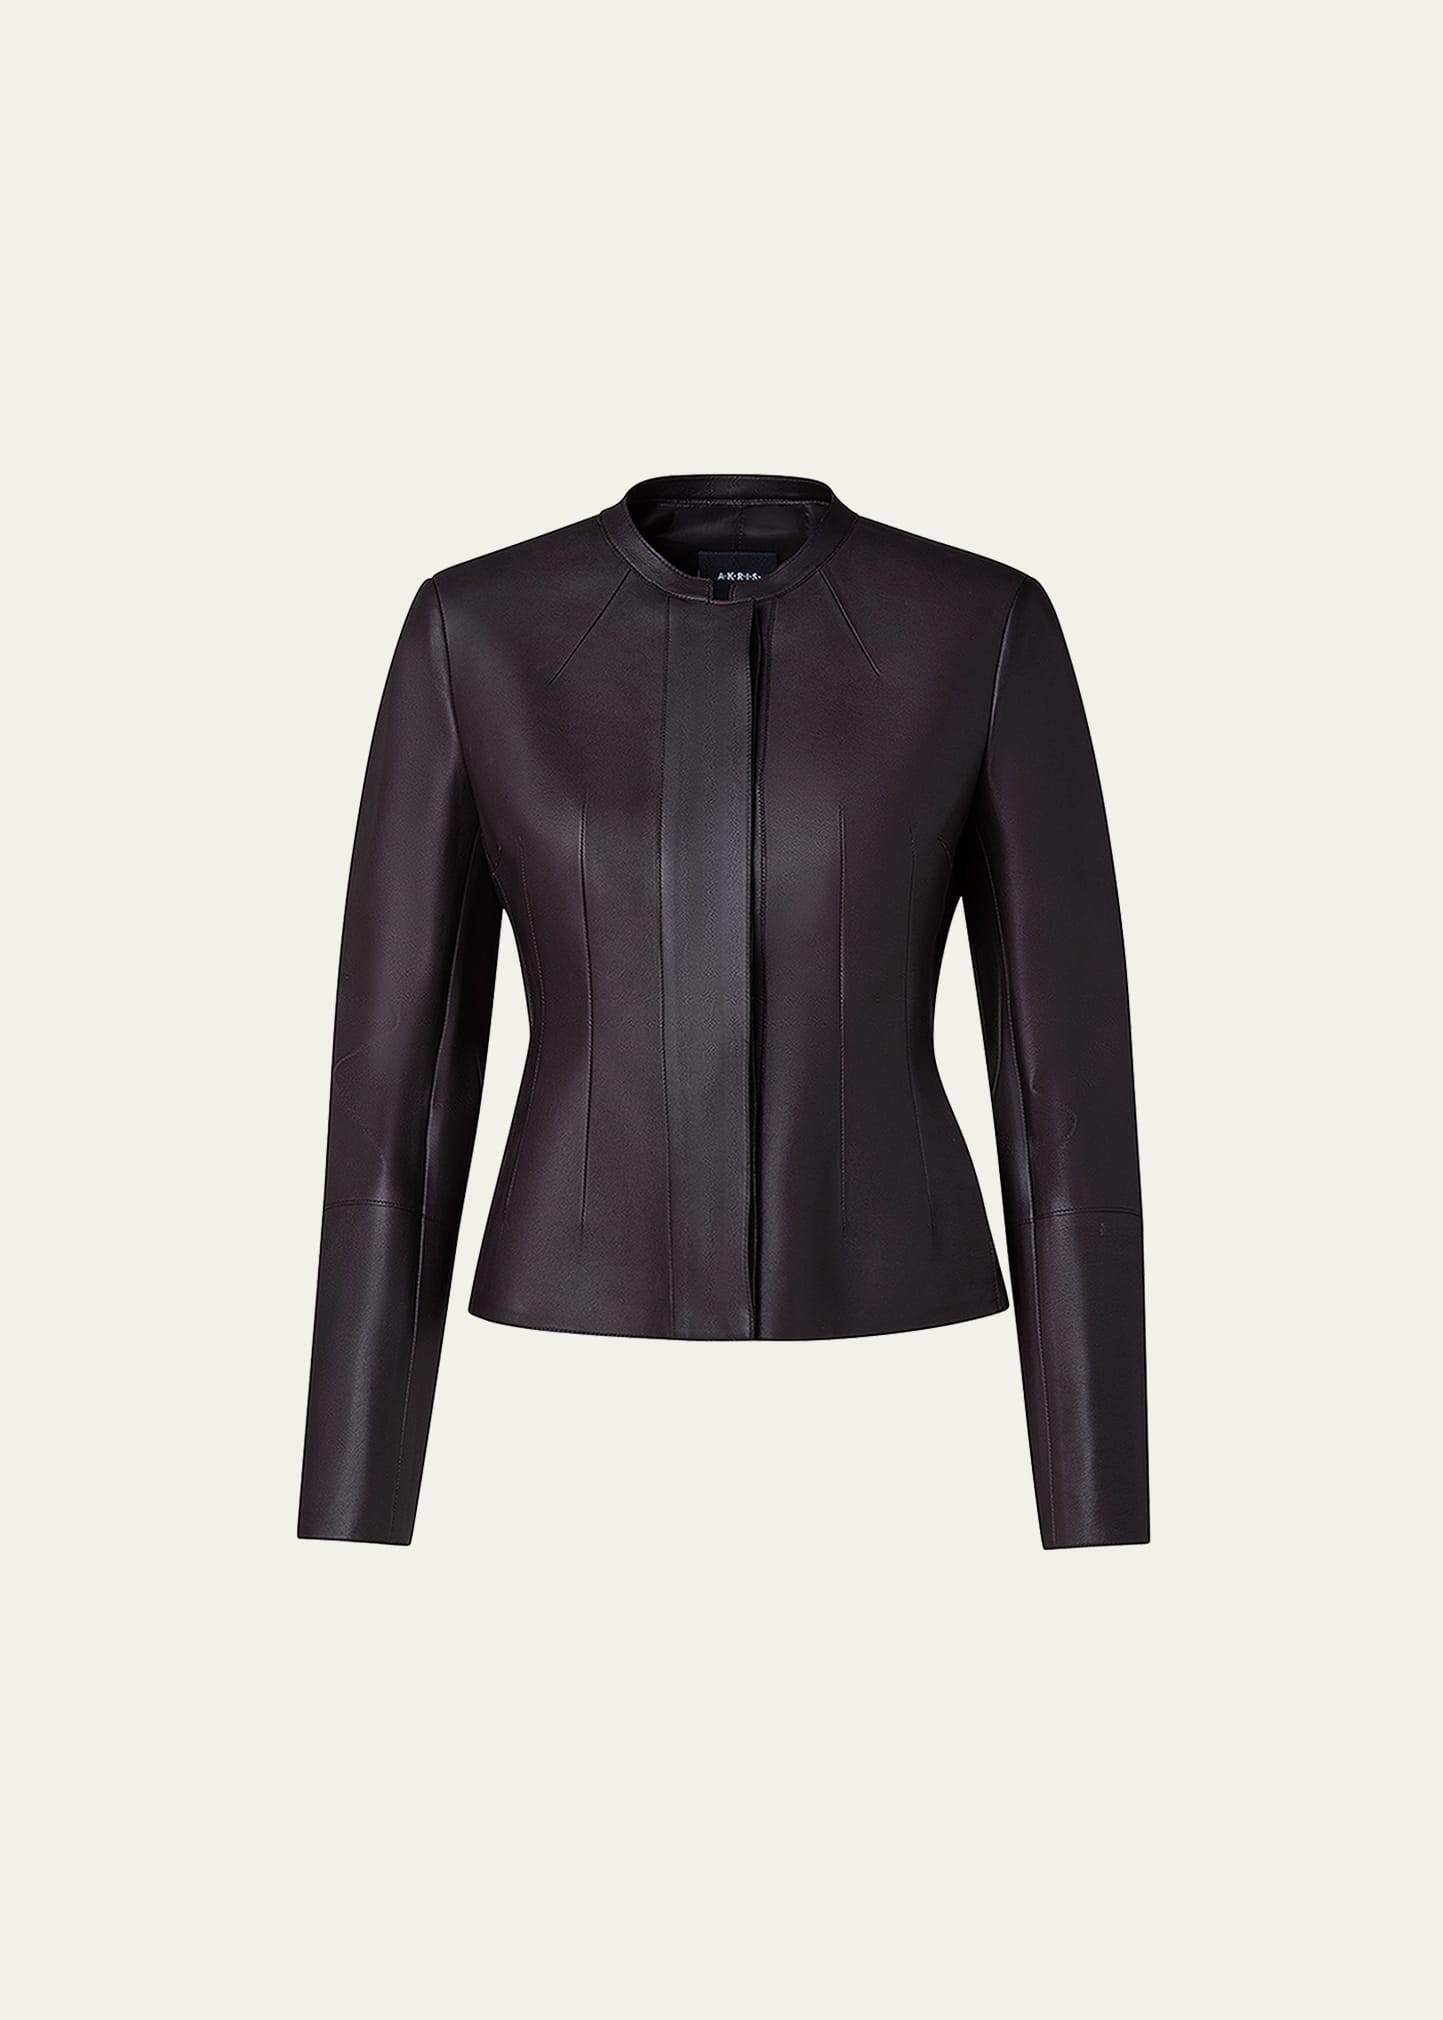 Akris Aniella Short Leather Jacket